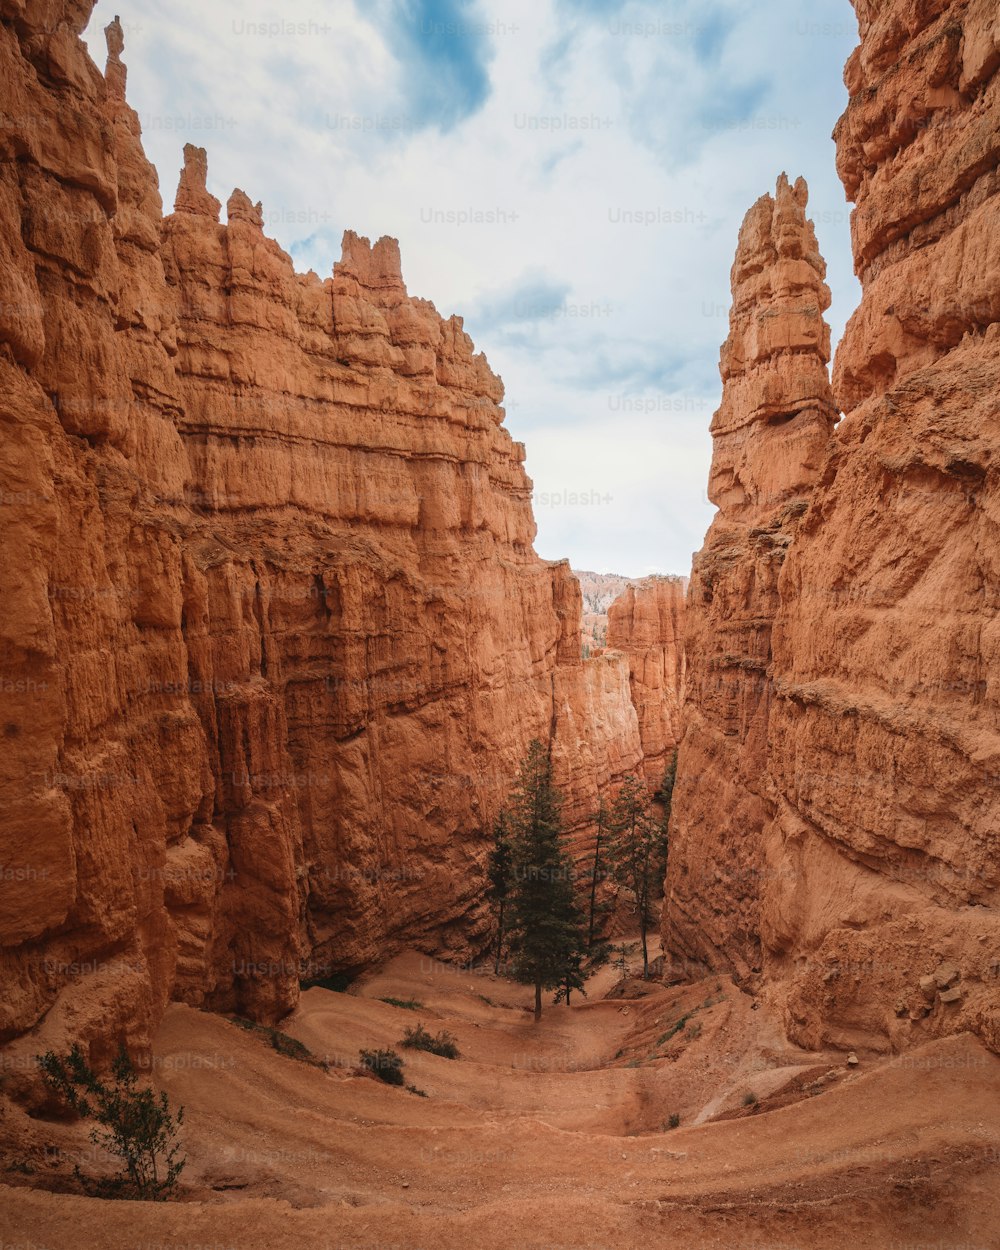 Un canyon roccioso con alberi